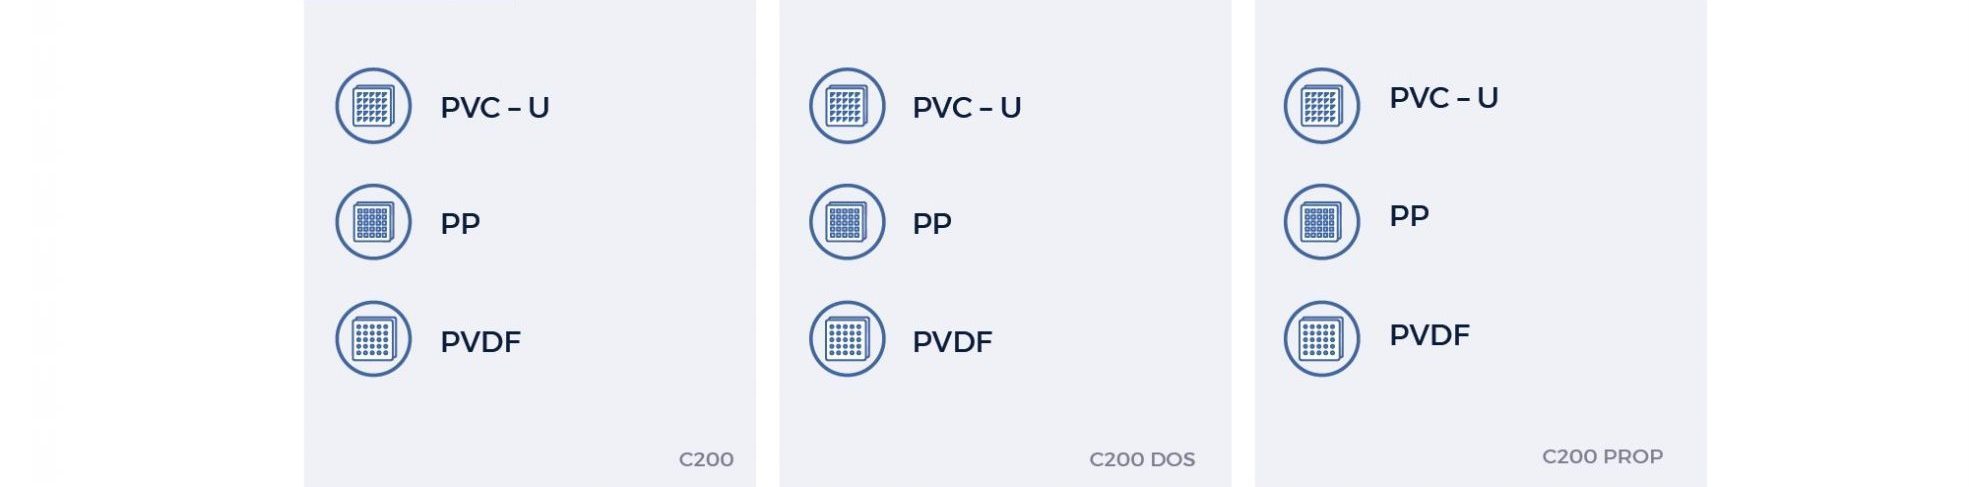 Valvole a sfera c200, c200 dos, c200 prop. Materiali PVC - U, PP, PVDF